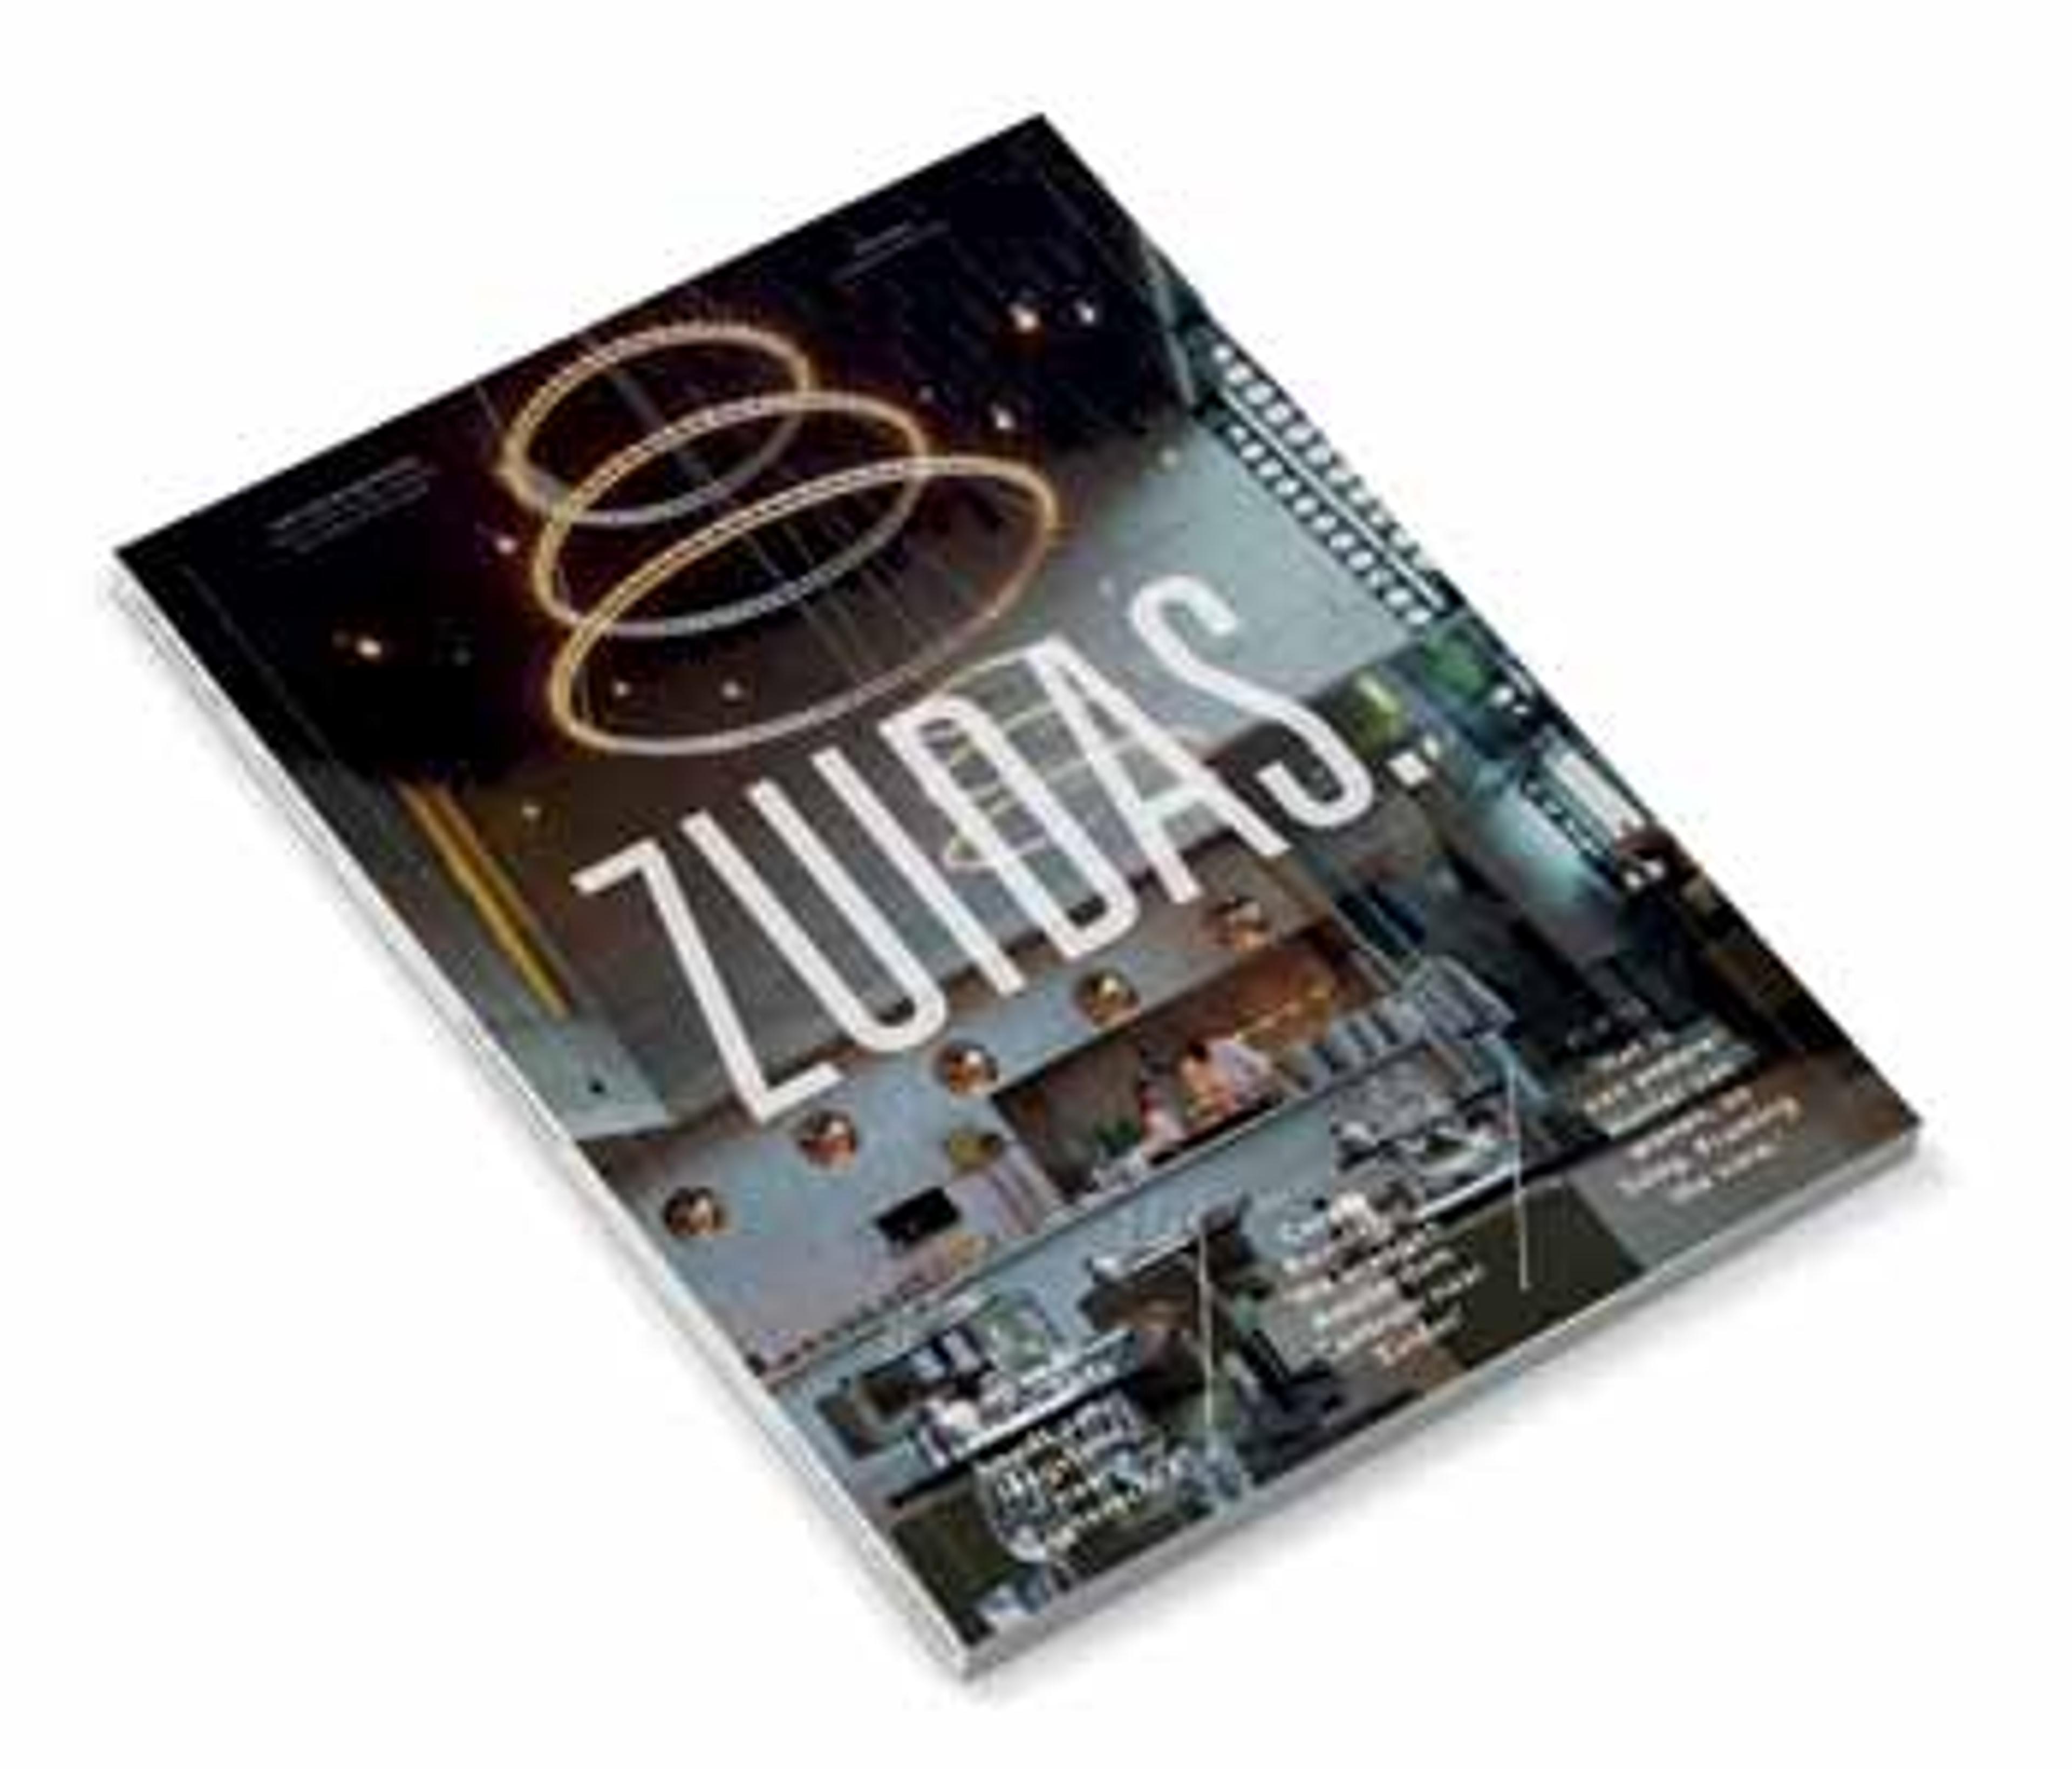 ZUIDAS. magazine, over wonen, werken en leven op de Zuidas